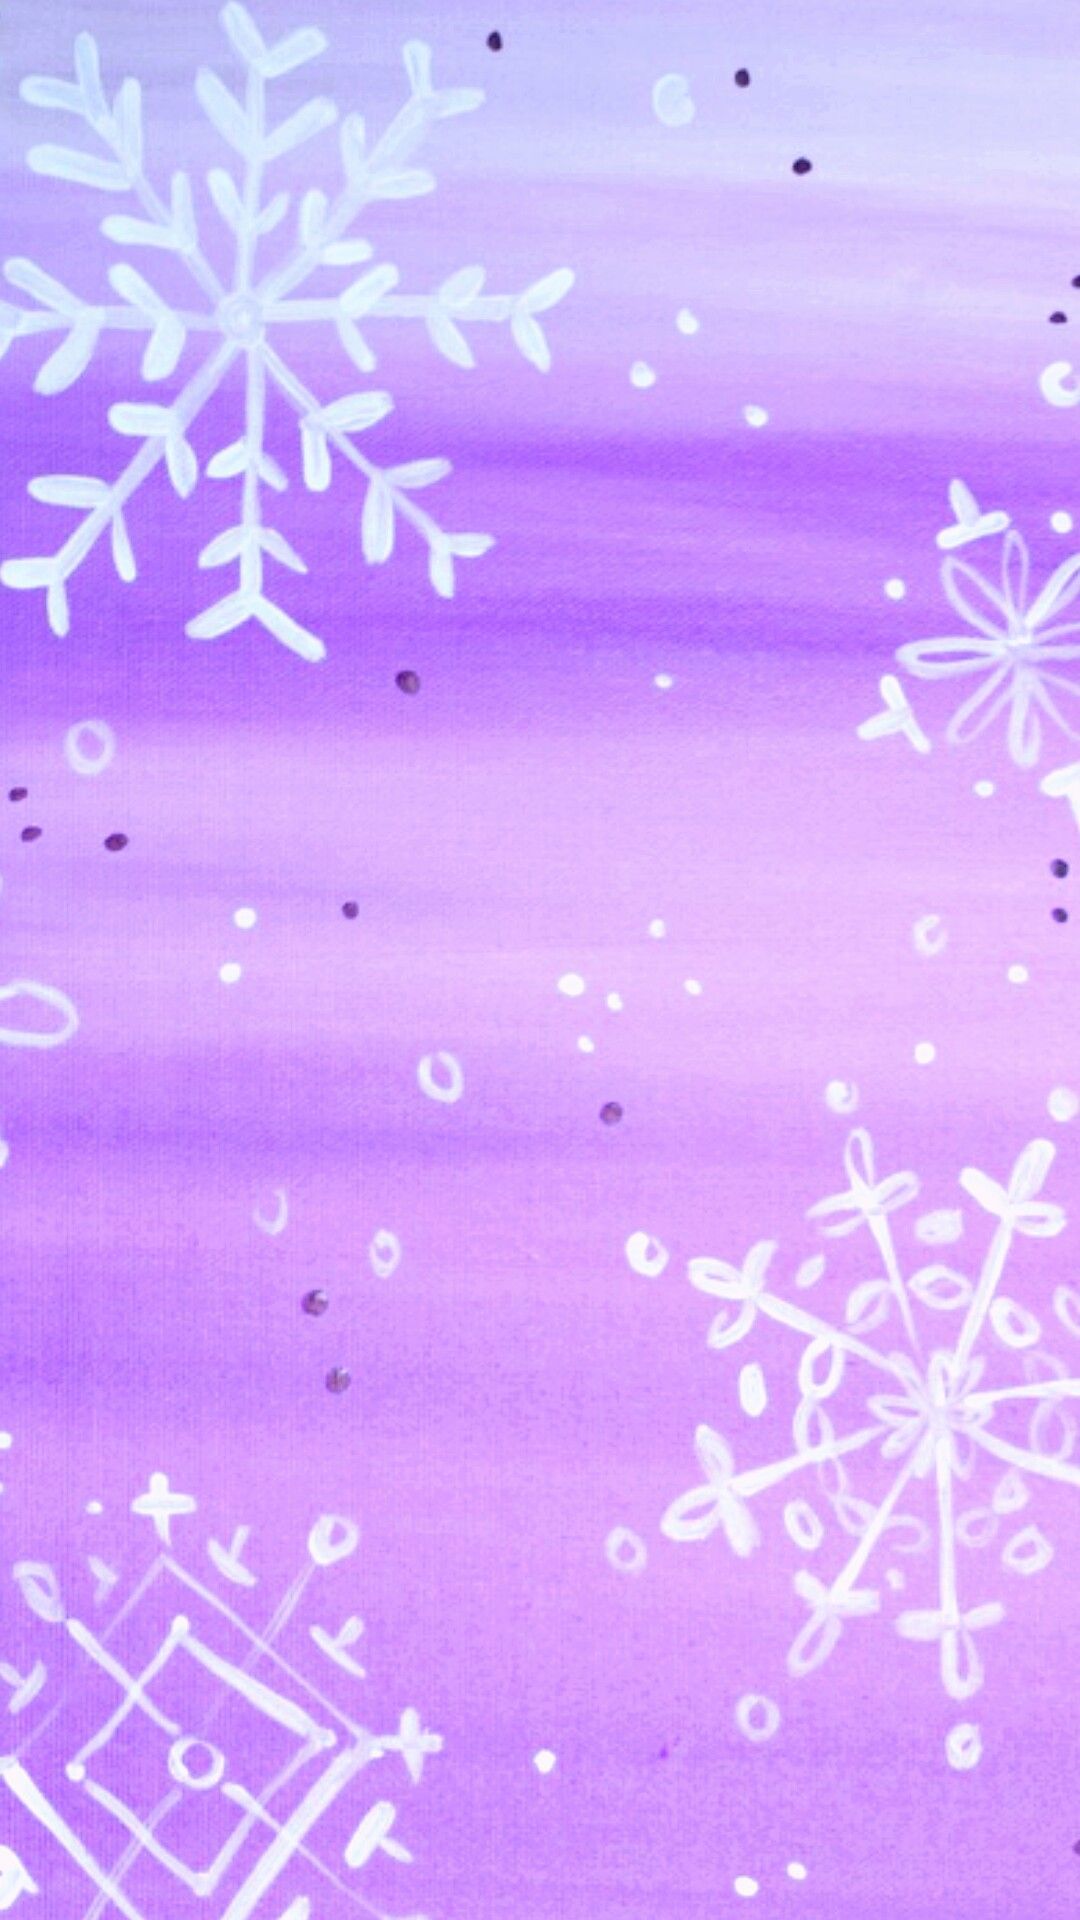 ❣︎∣ᴮᵞᵛᴵ·⁴·ᵞᴼᵁ∣❣︎. Holiday wallpaper, Winter wallpaper, Christmas wallpaper